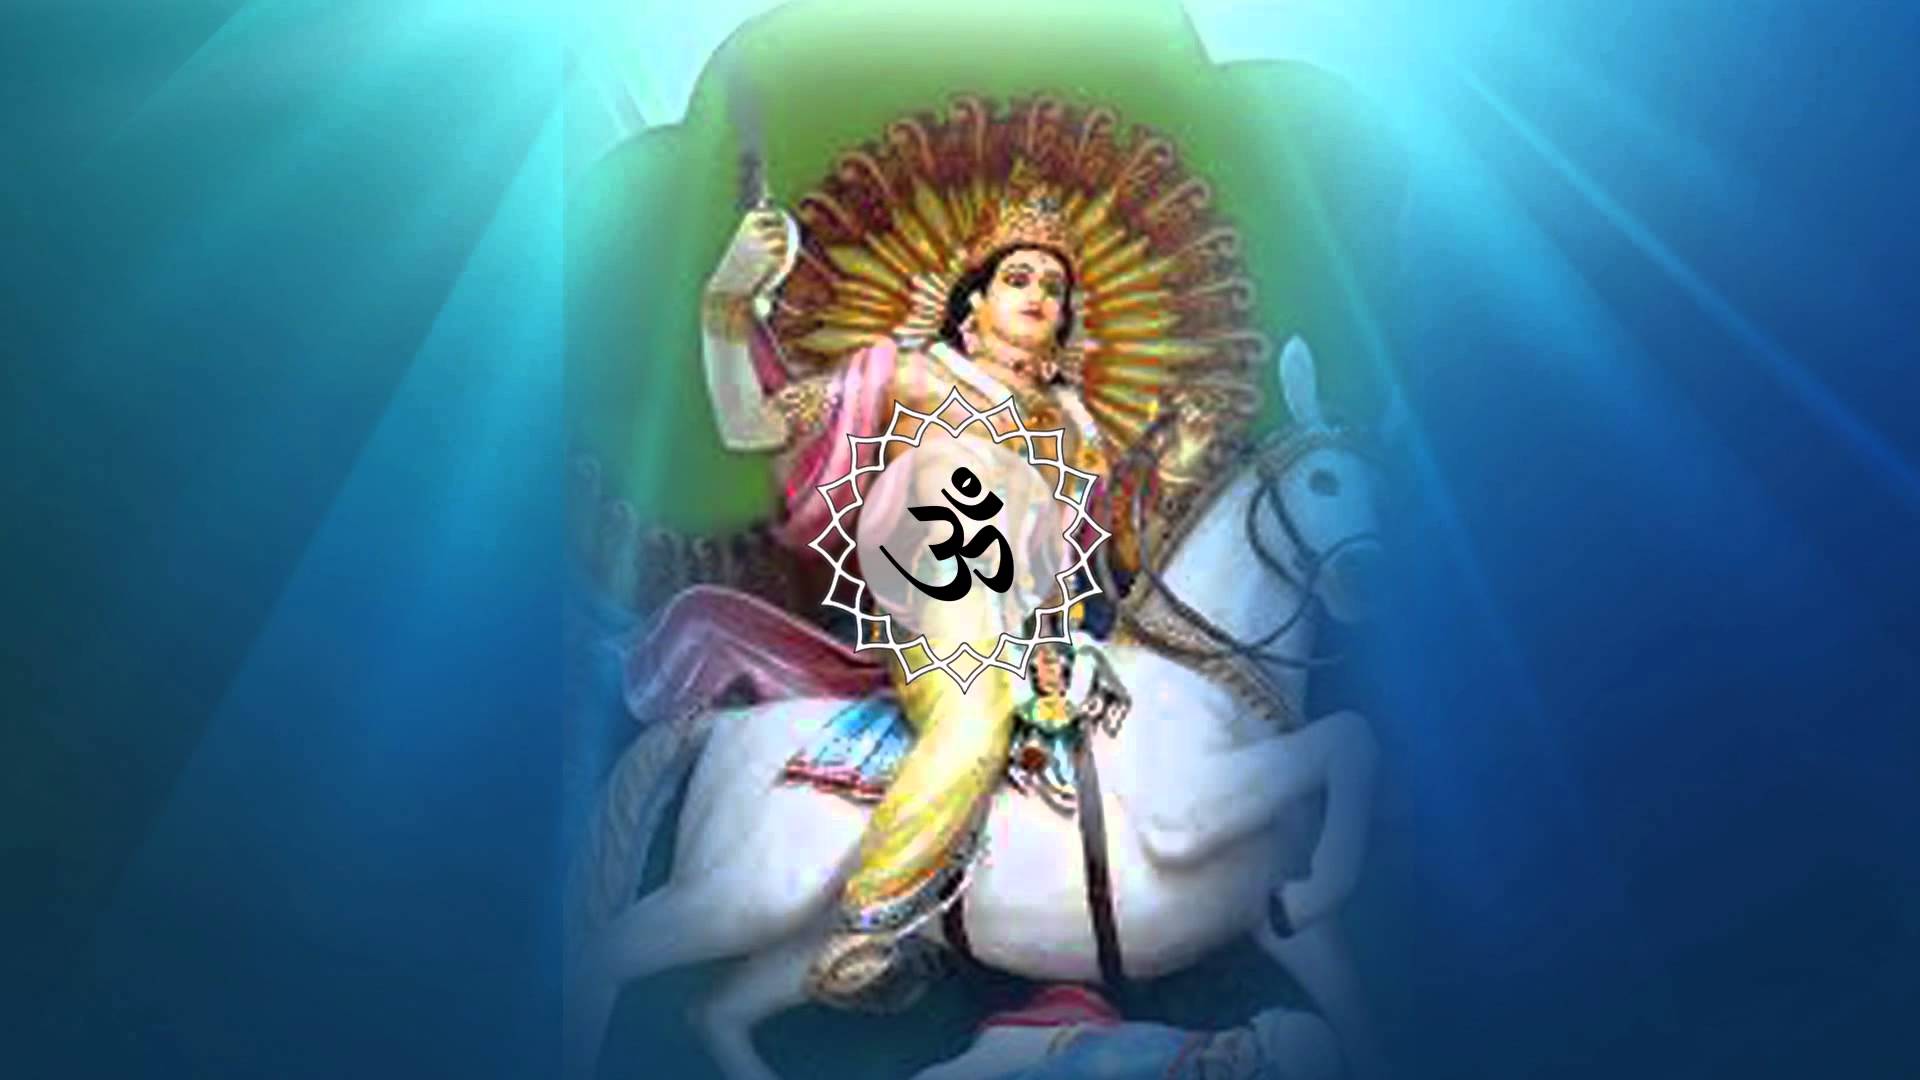 Kalki avatar images for mobile hindu gods and goddesses